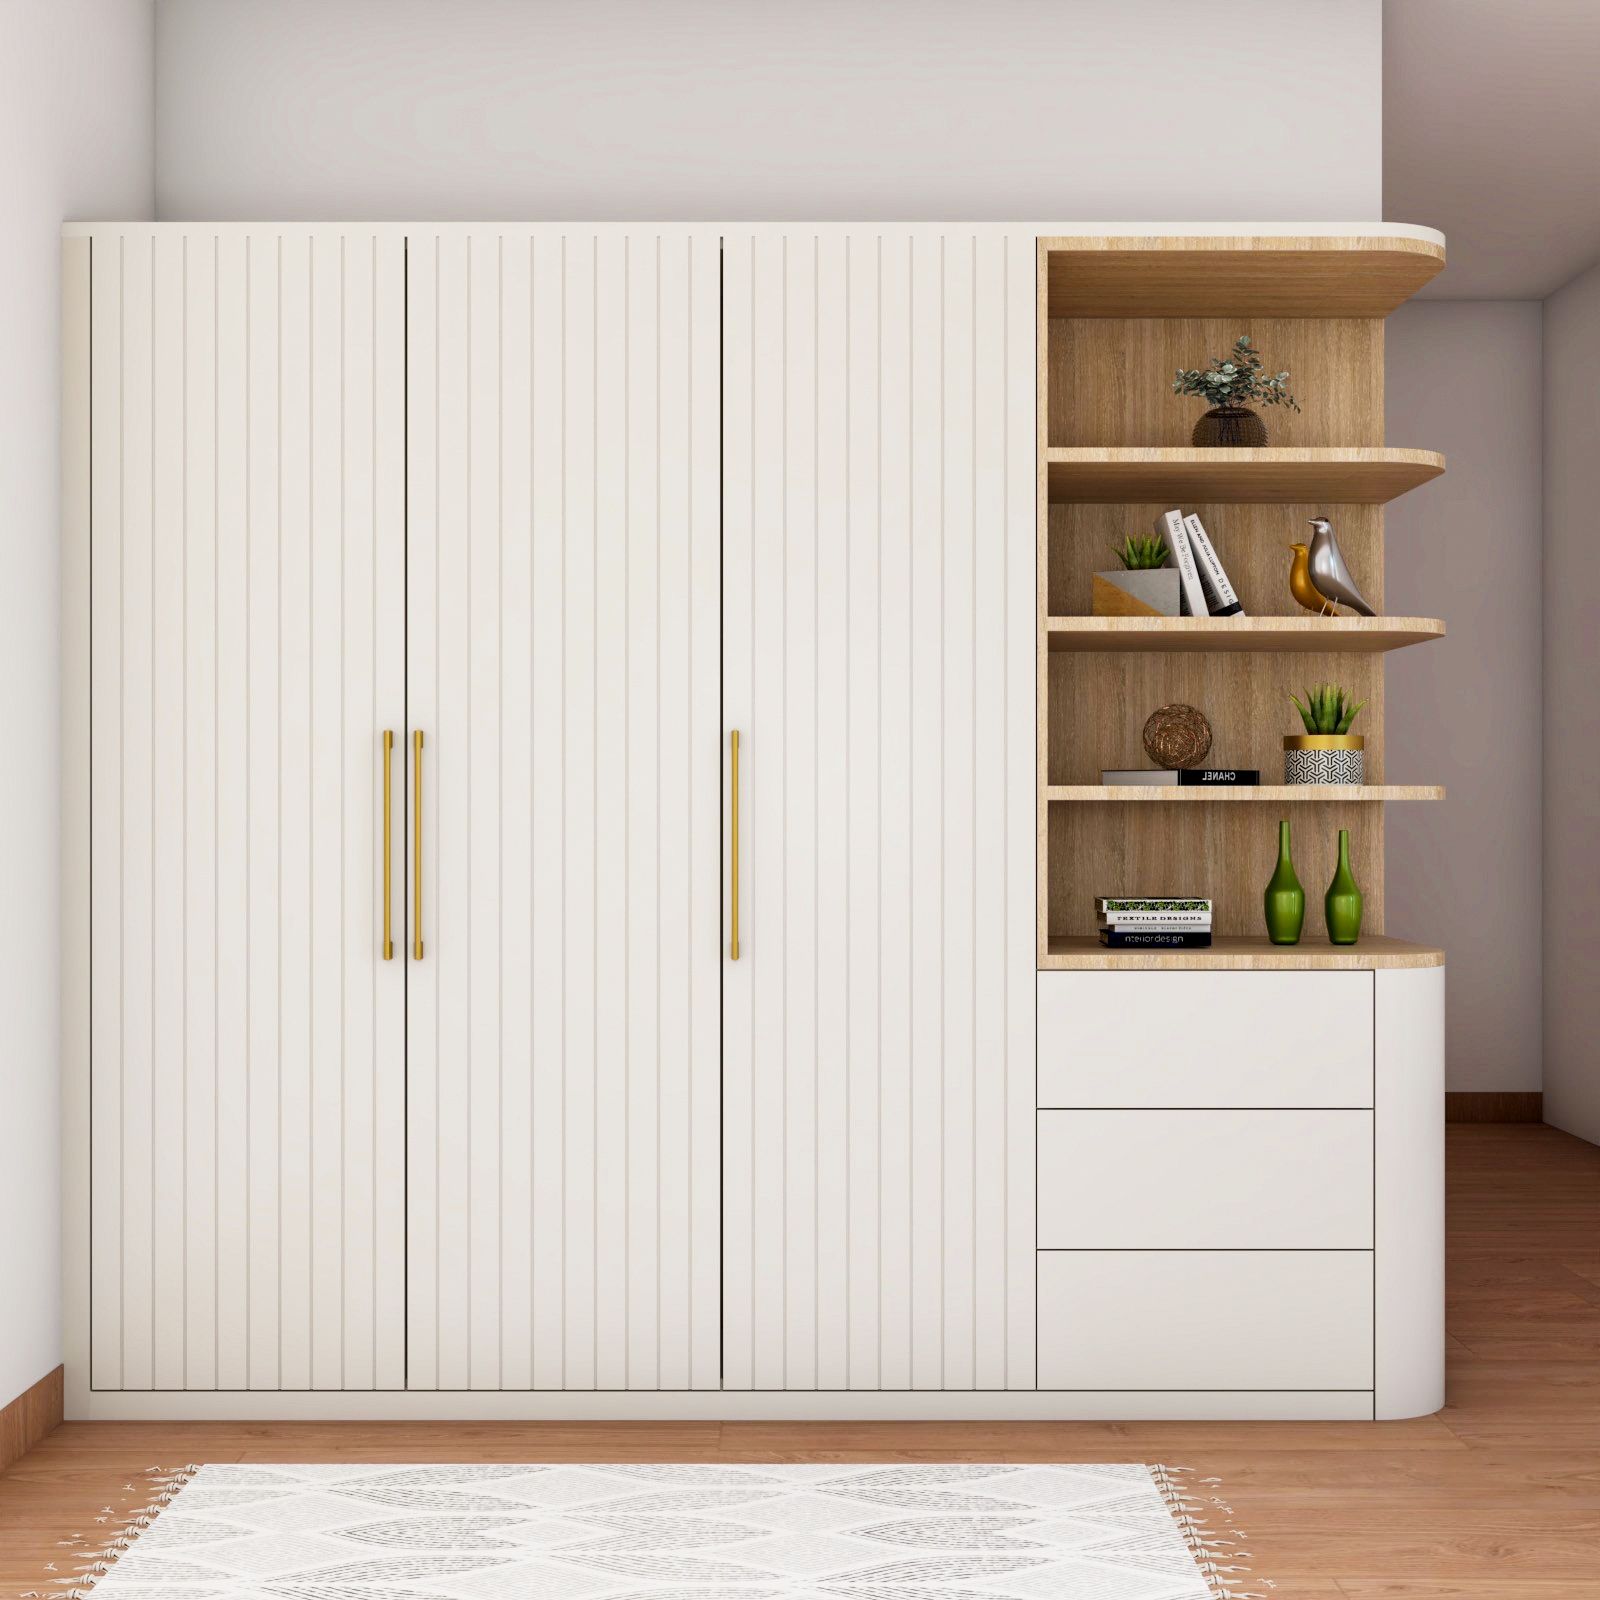 Contemporary Striped 3-Door Swing Wardrobe Design In White